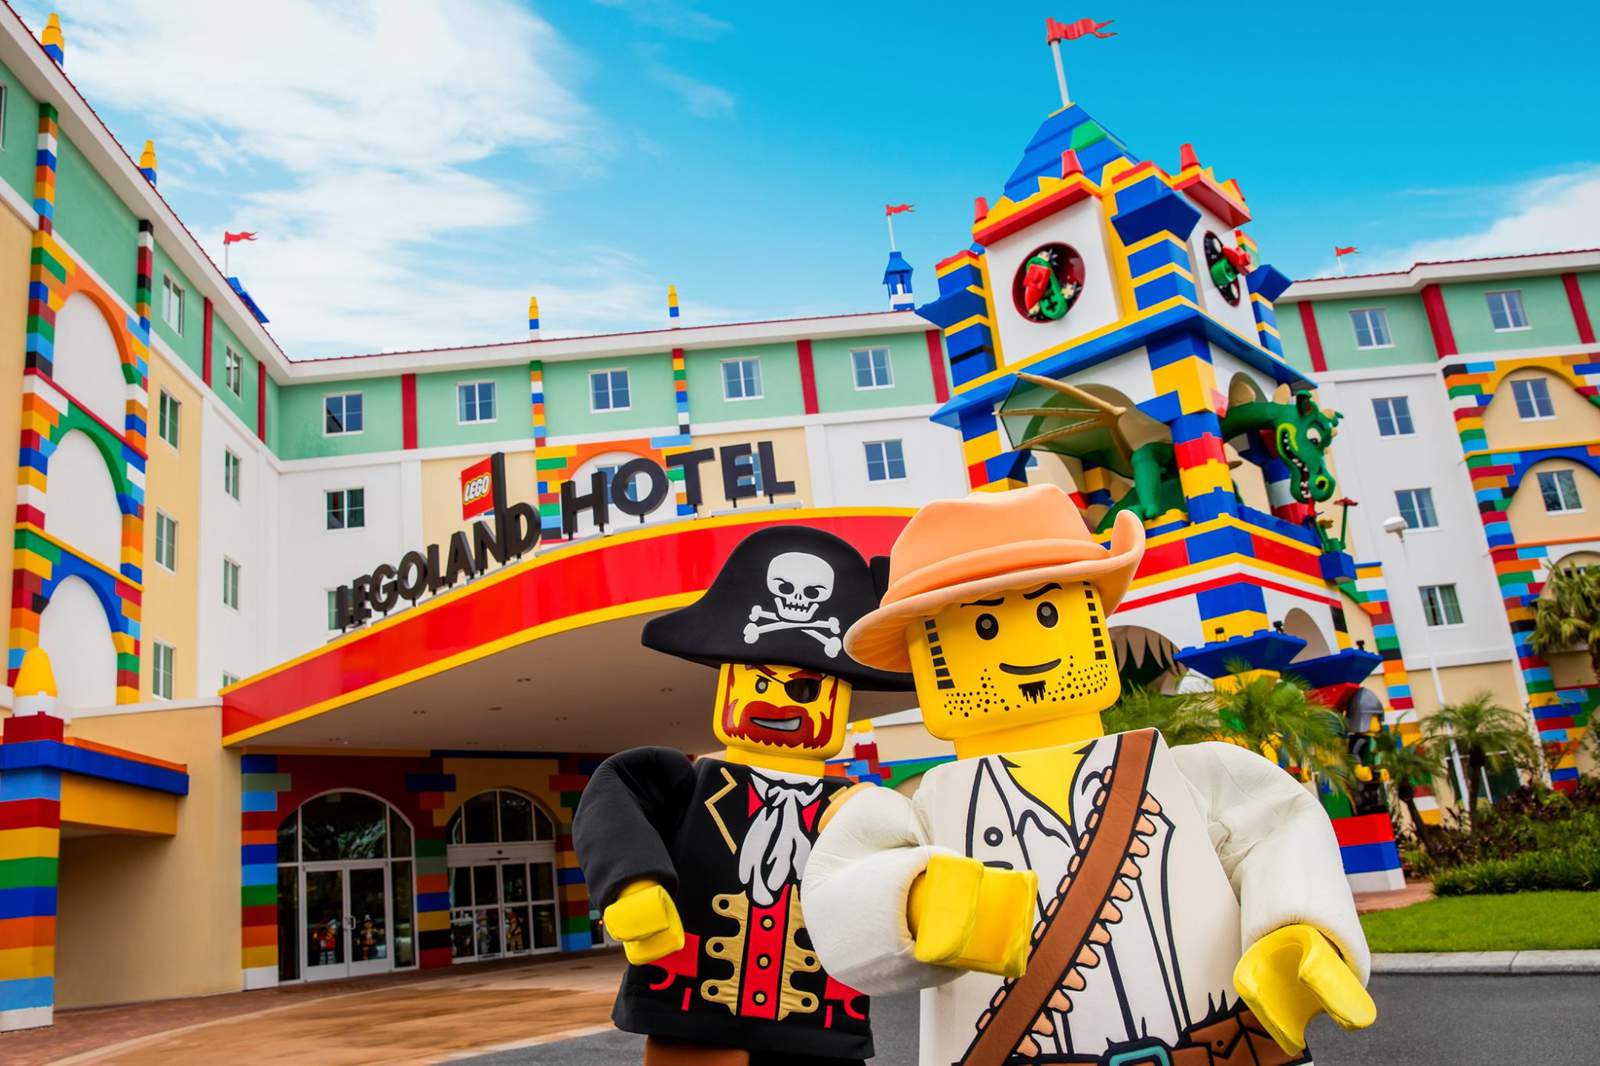 Legoland Florida plans expansion, new rides